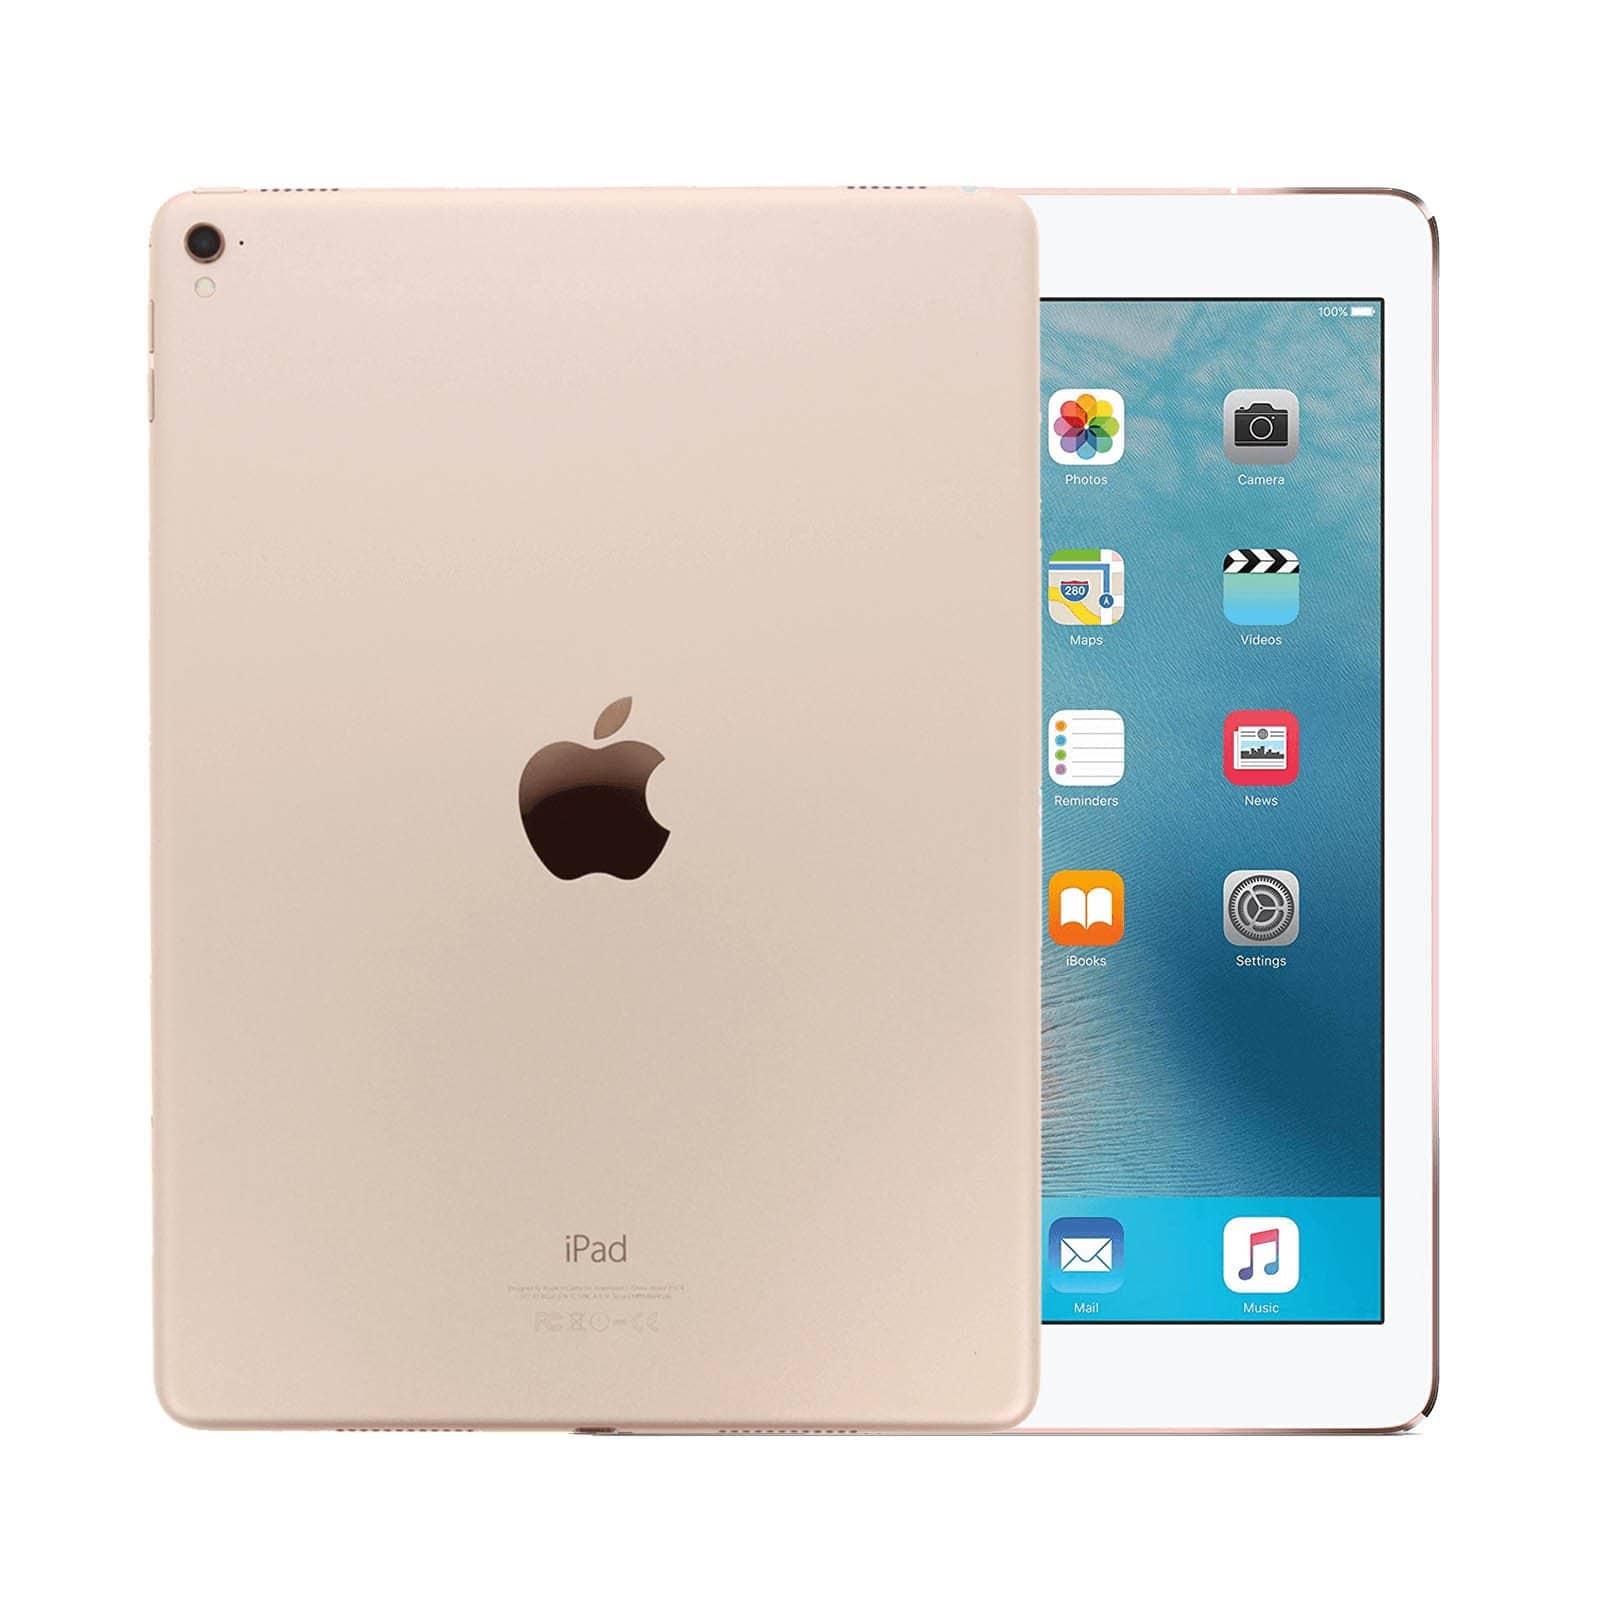 iPad Pro 9.7 Inch 256GB Gold Very Good - WiFi 256GB Gold Very Good